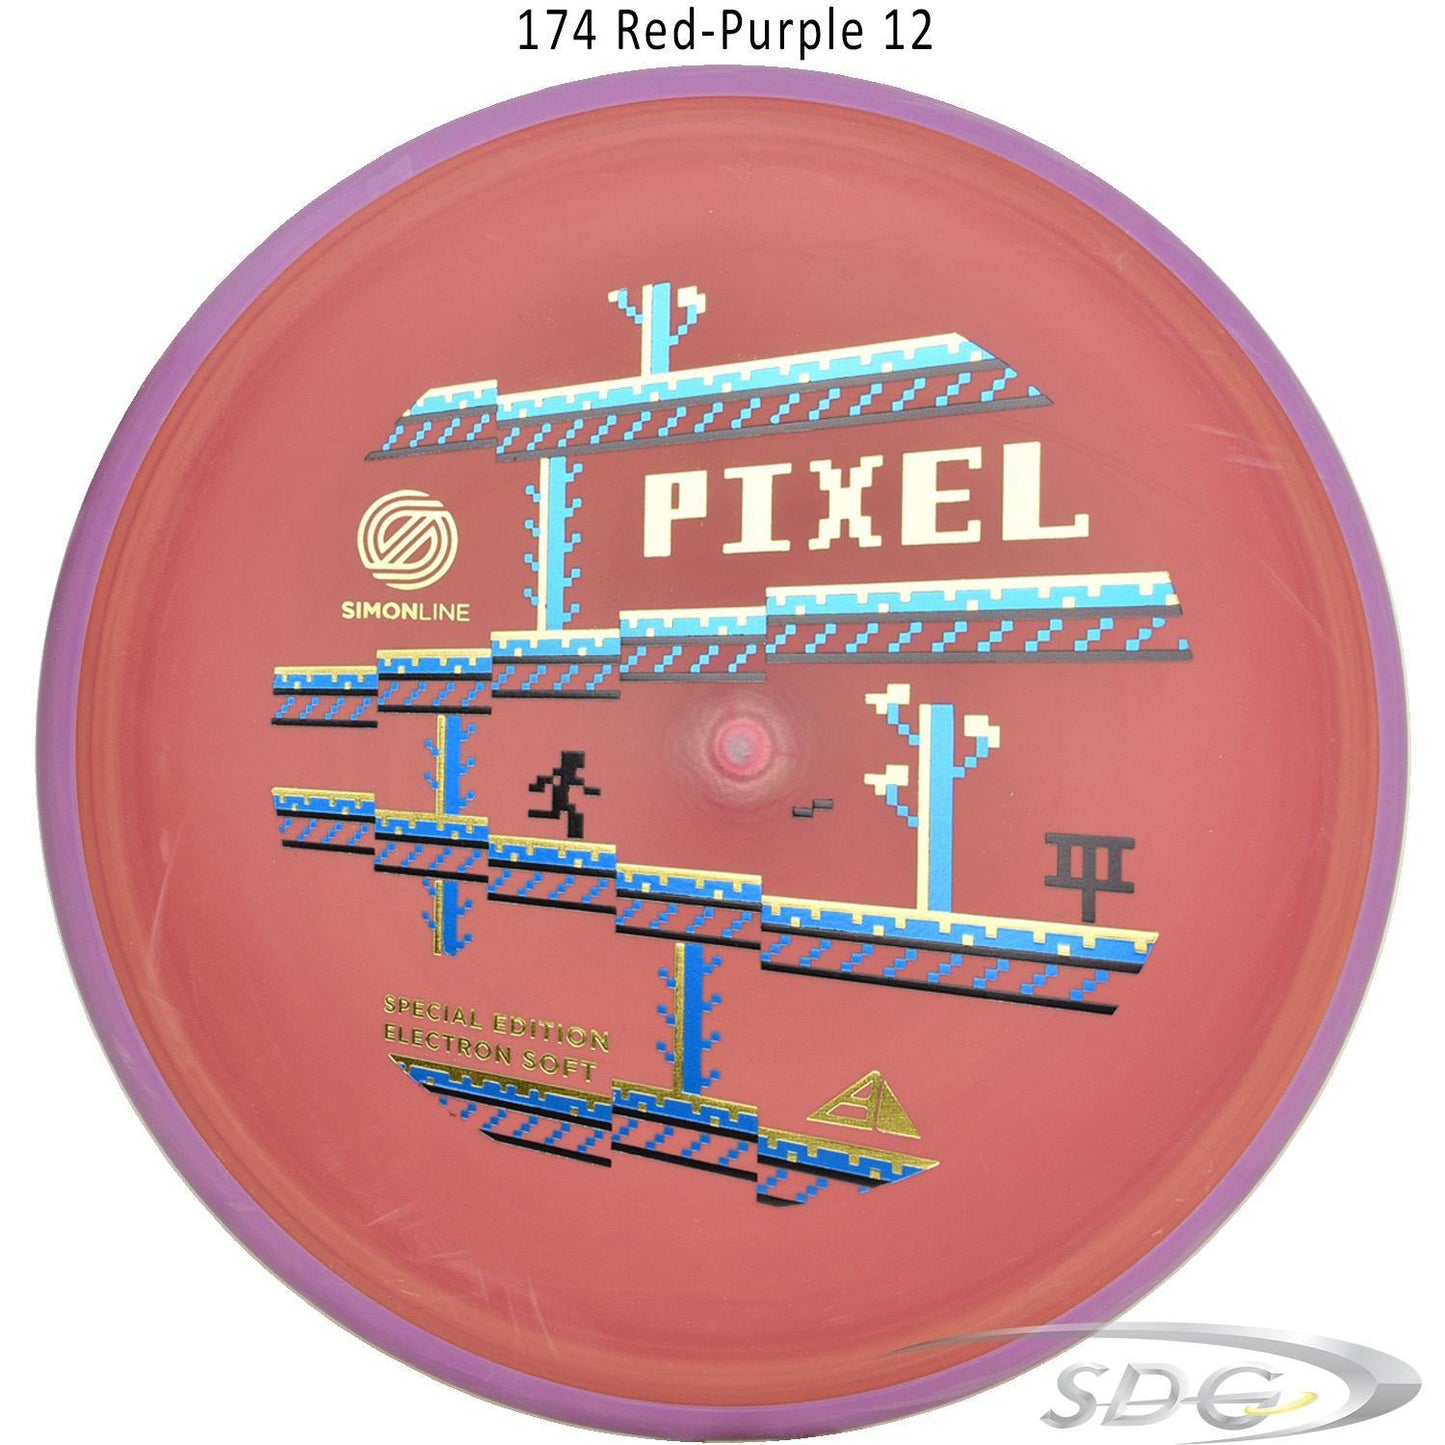 axiom-electron-pixel-soft-se-simon-line-disc-golf-putter 174 Red-Purple 12 